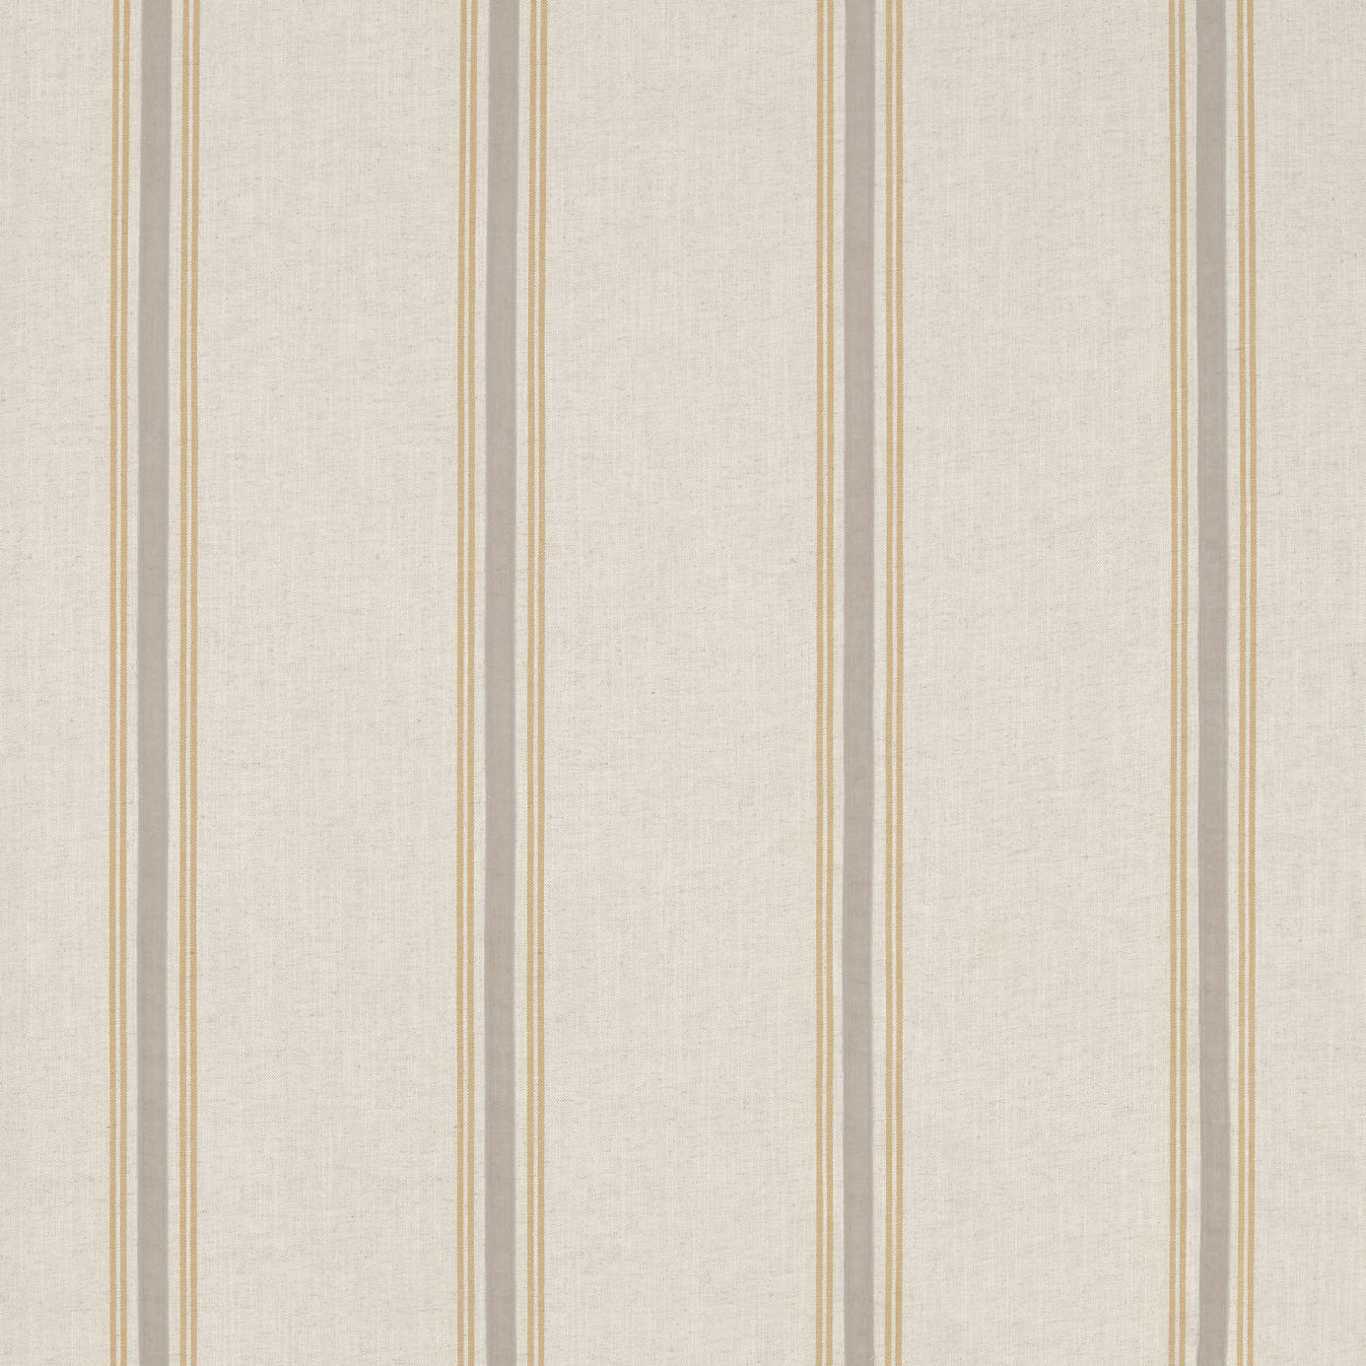 Hockley Stripe Fabric by Sanderson Home